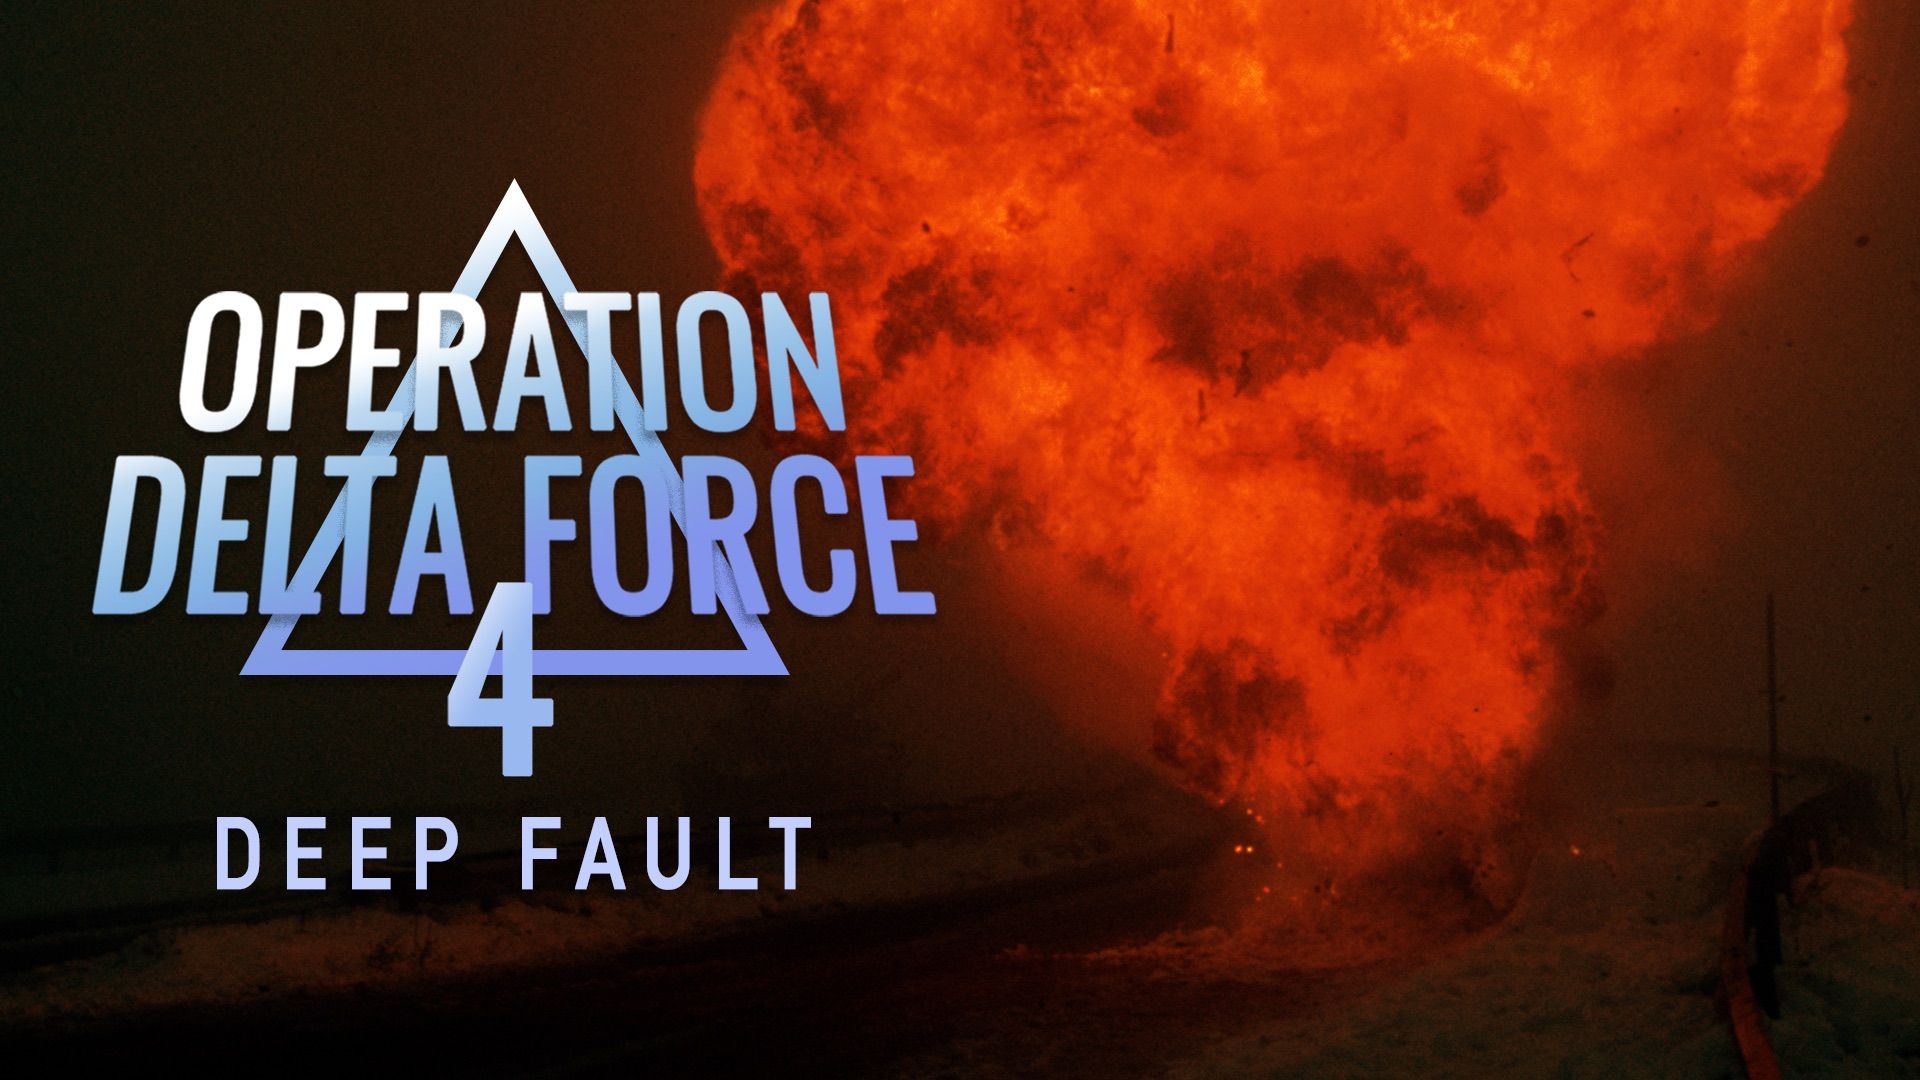 Operation Delta Force 4: Deep Fault Backdrop